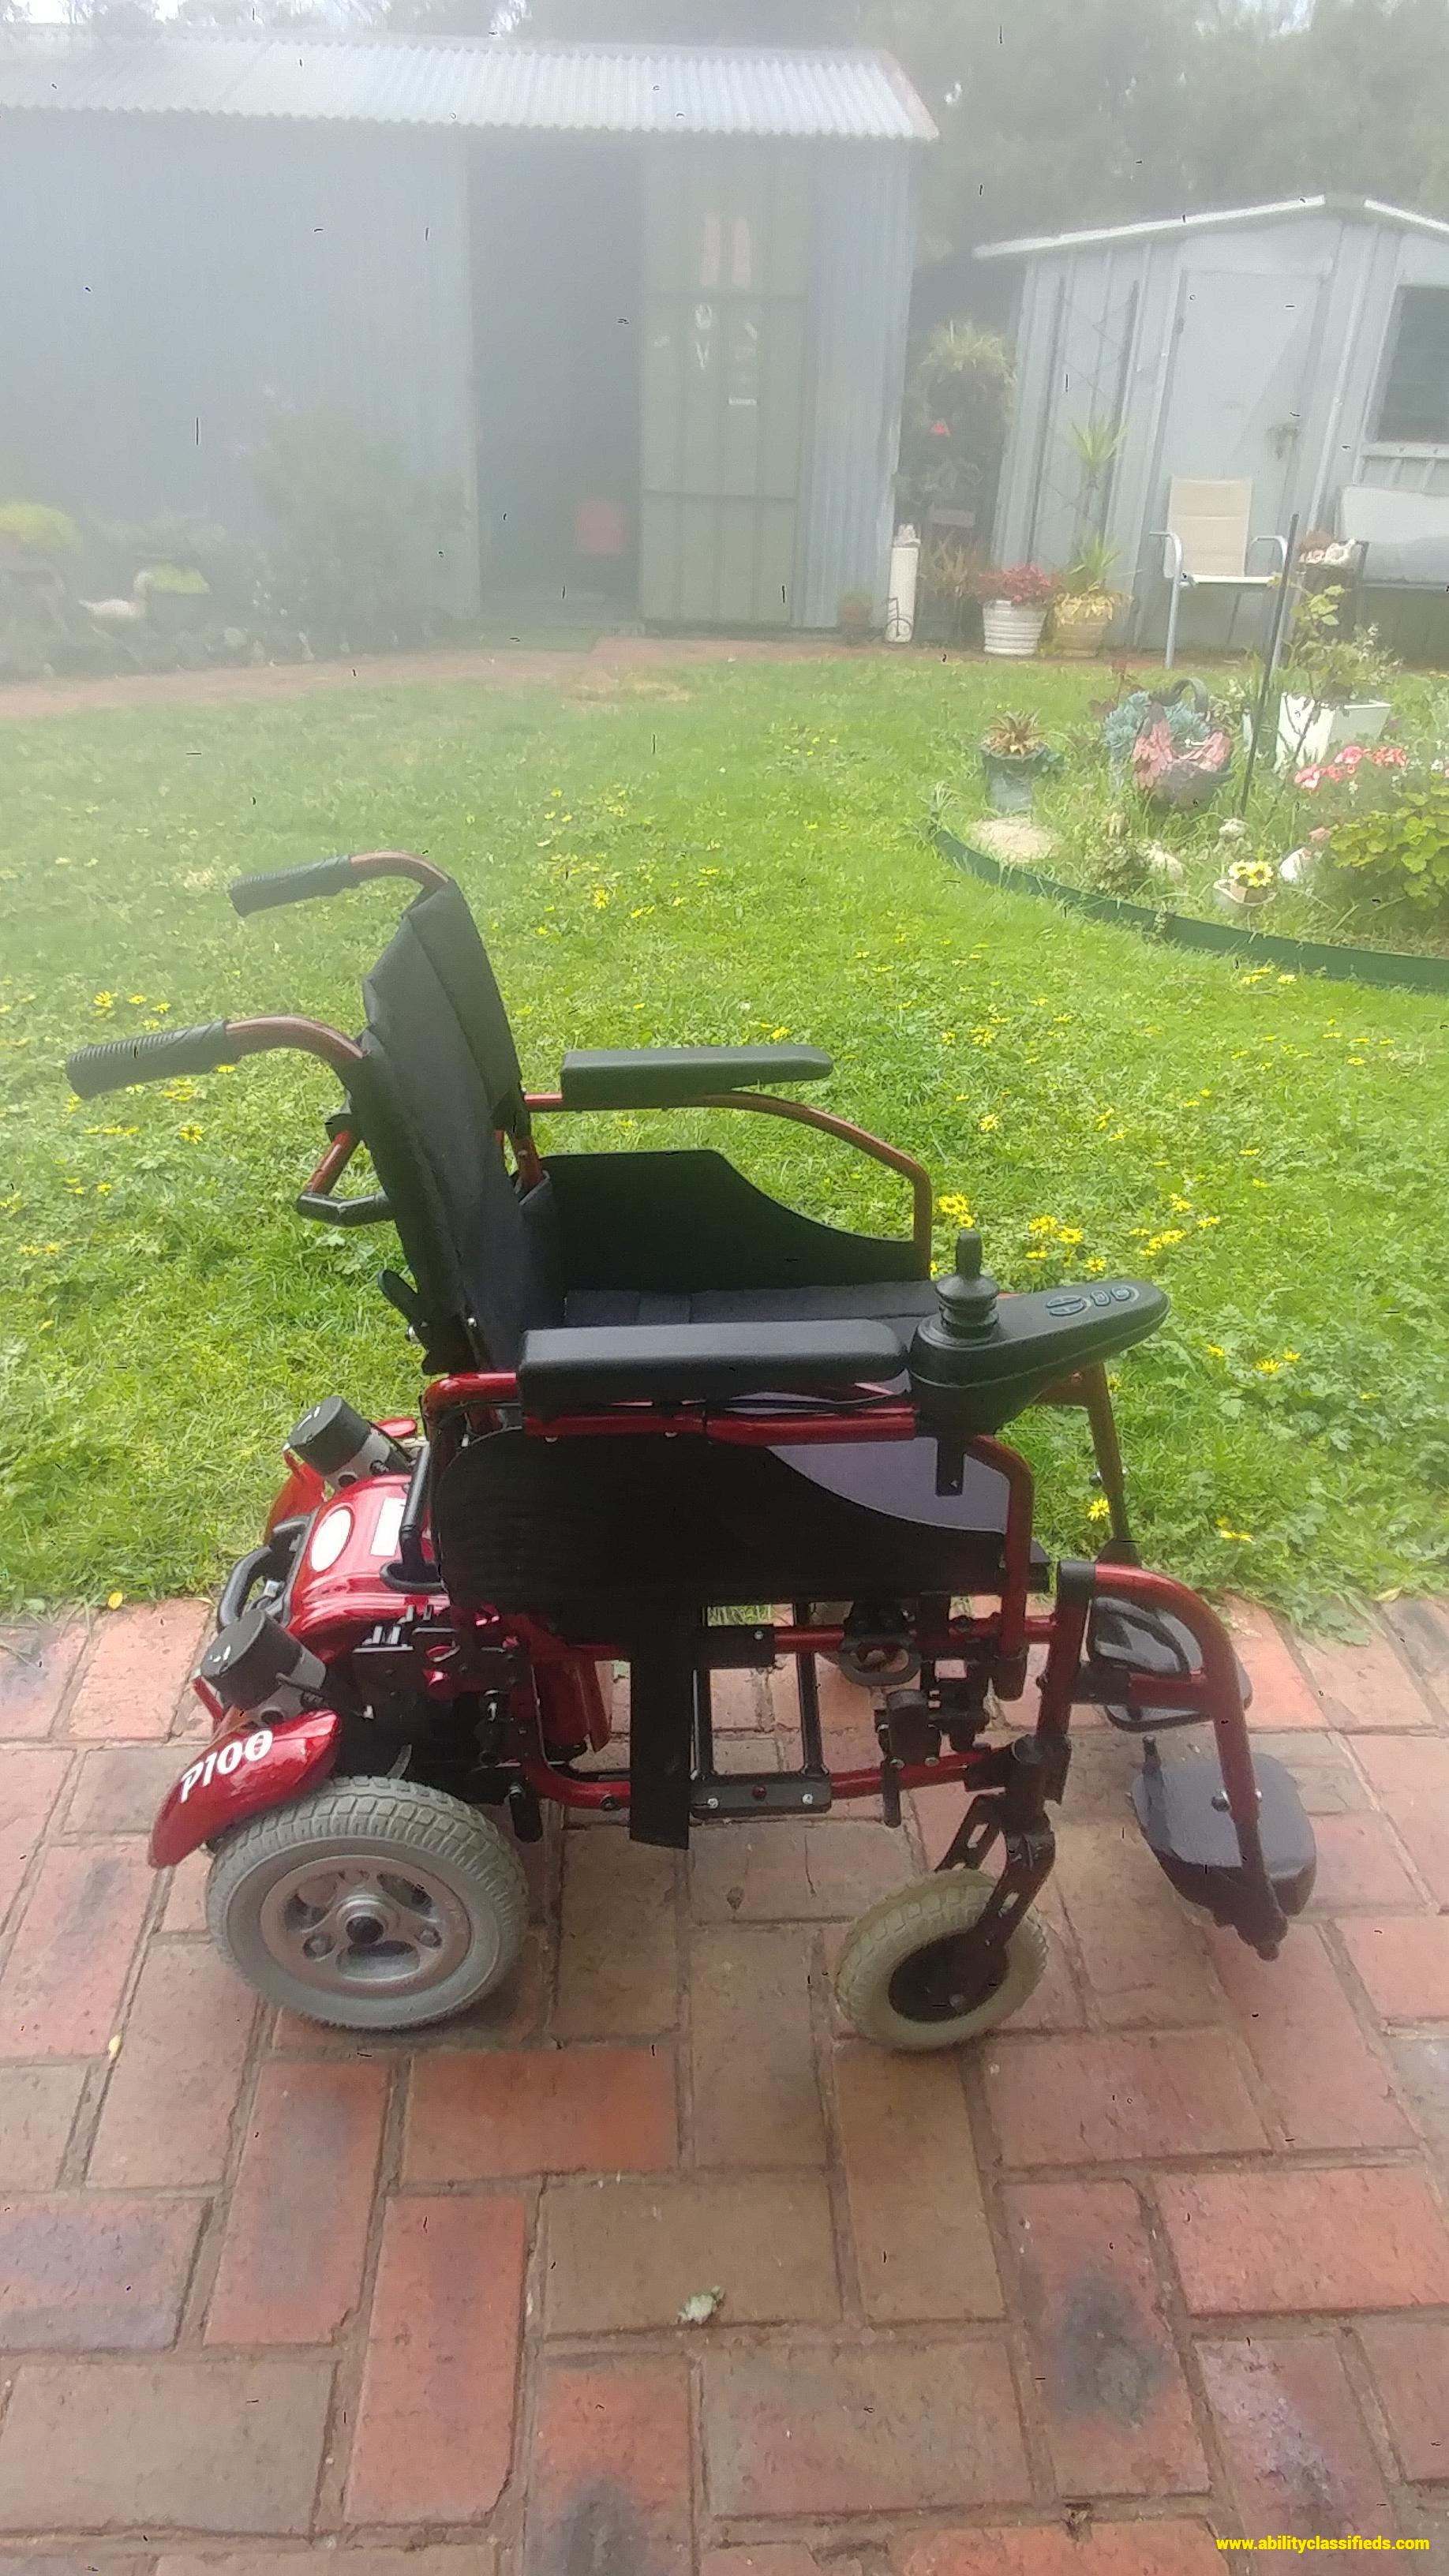 Breezy P100 Electric Wheelchair.